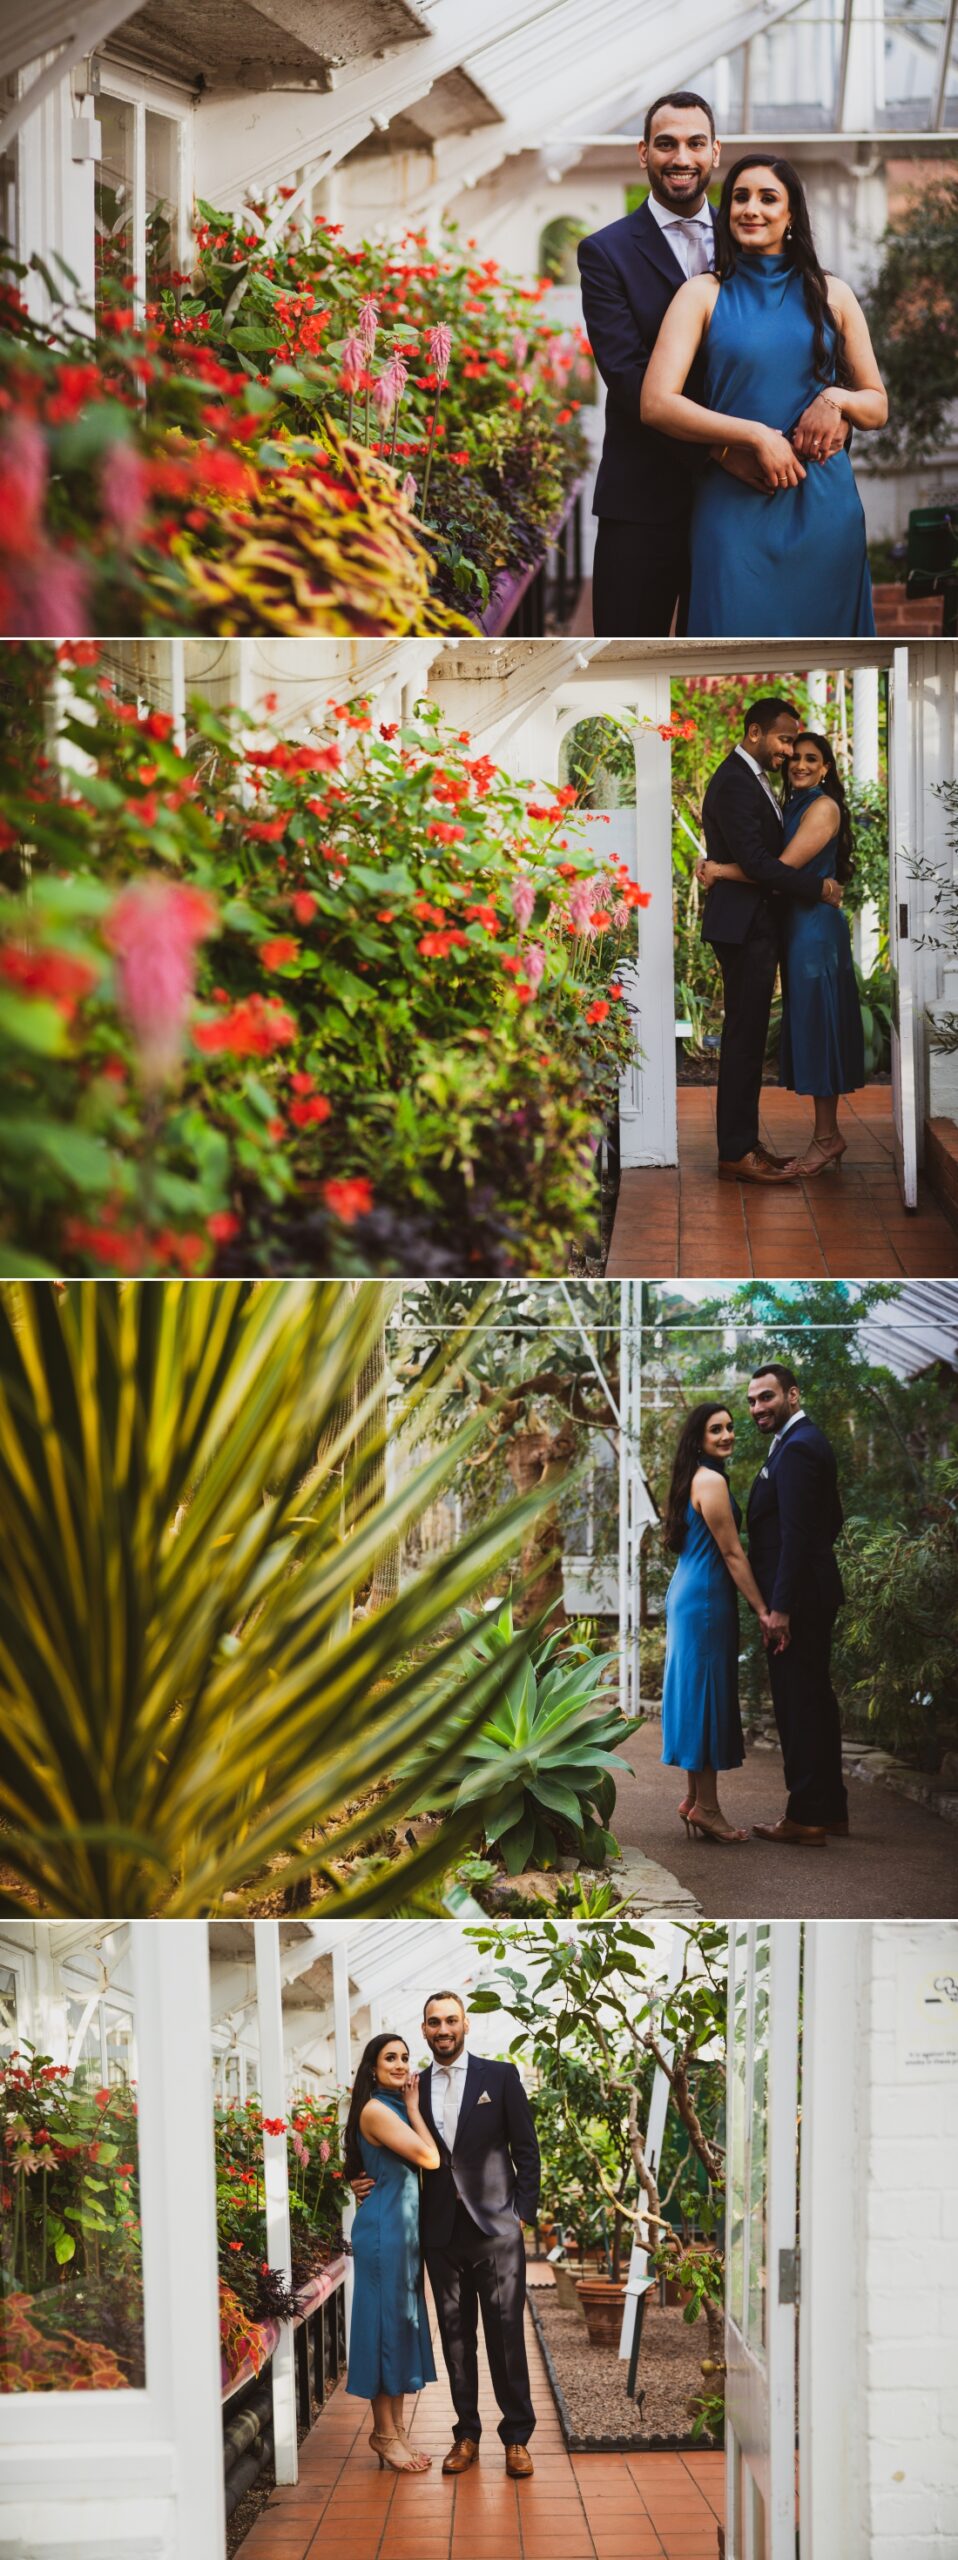 Pre wedding Shoot at Botanical Gardens Anveer Tej 5 scaled